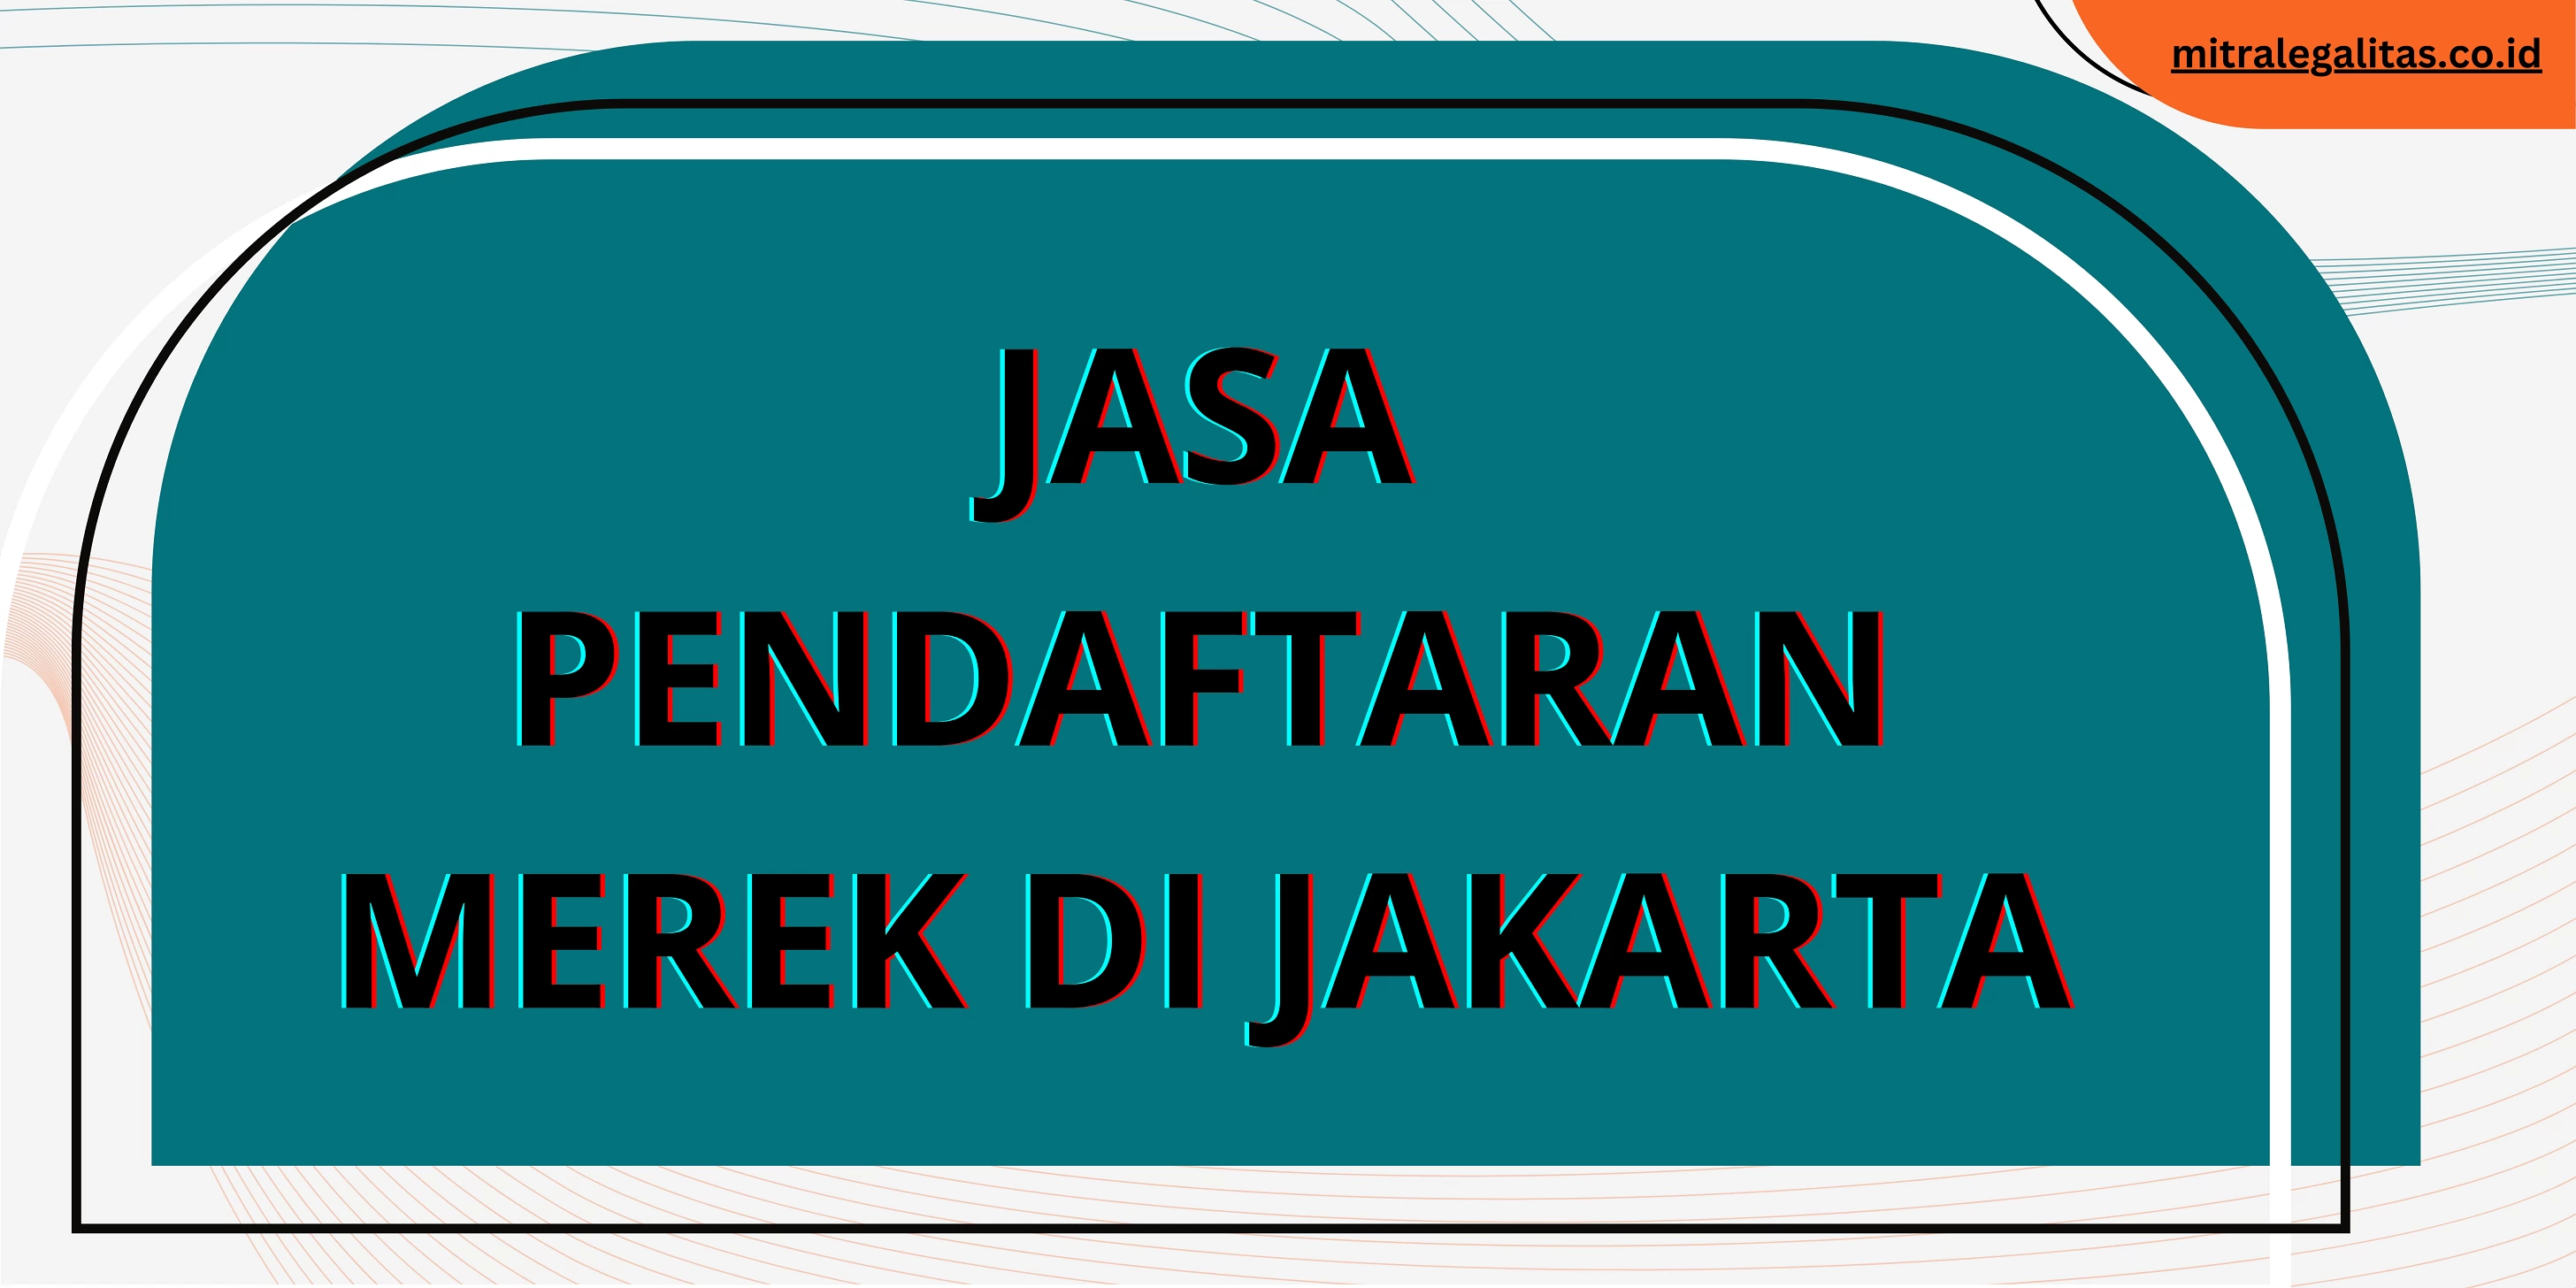 Jasa Pendaftaran Merek di Jakarta